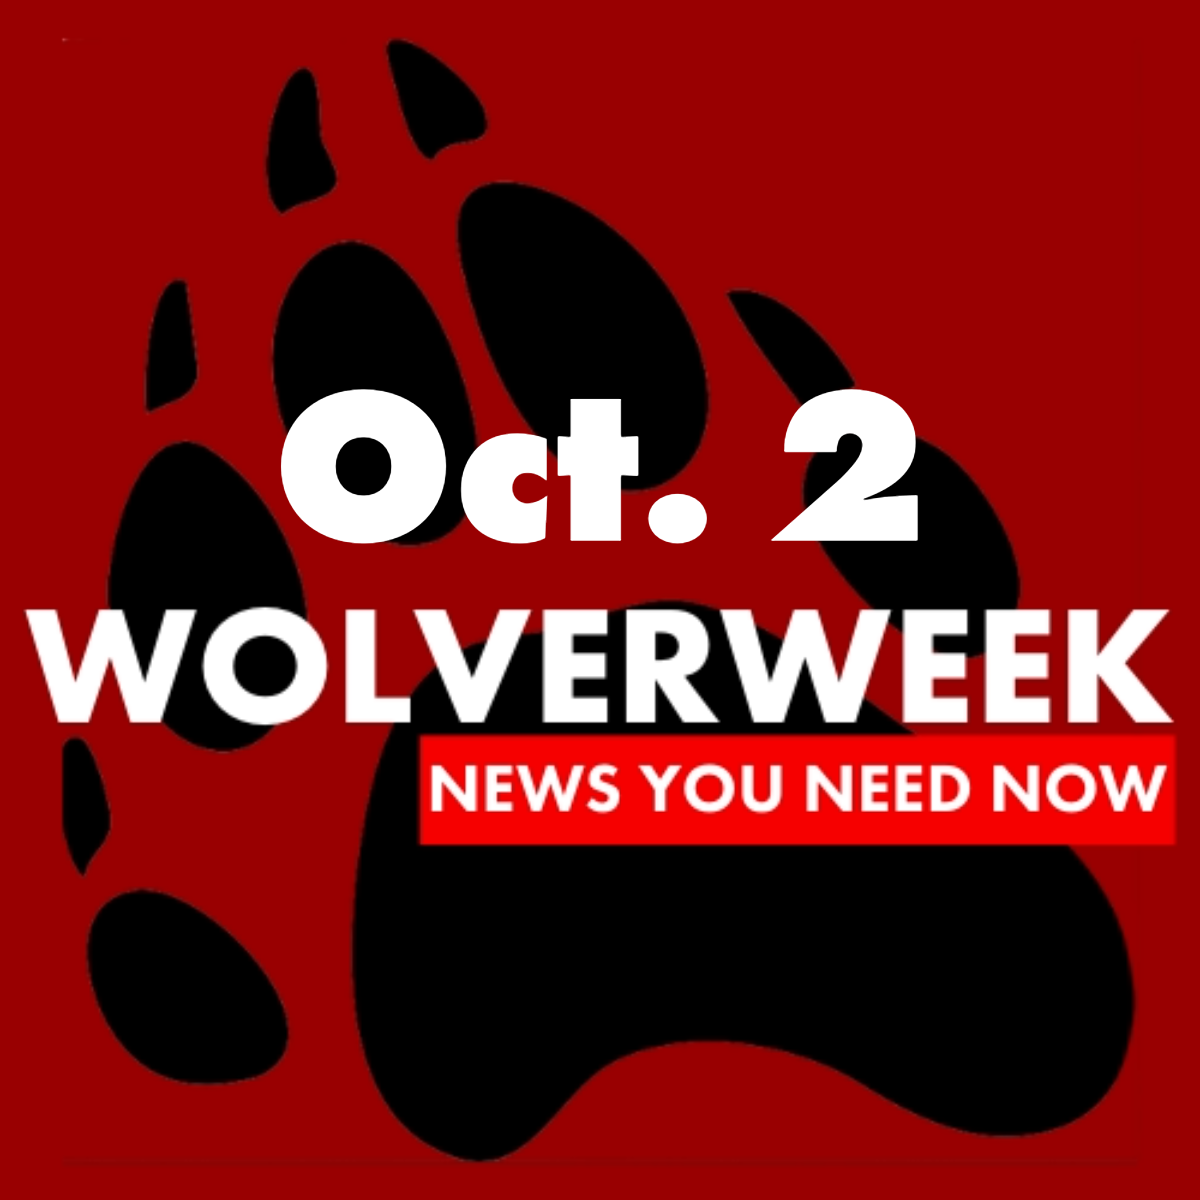 Wolverweek 10/2